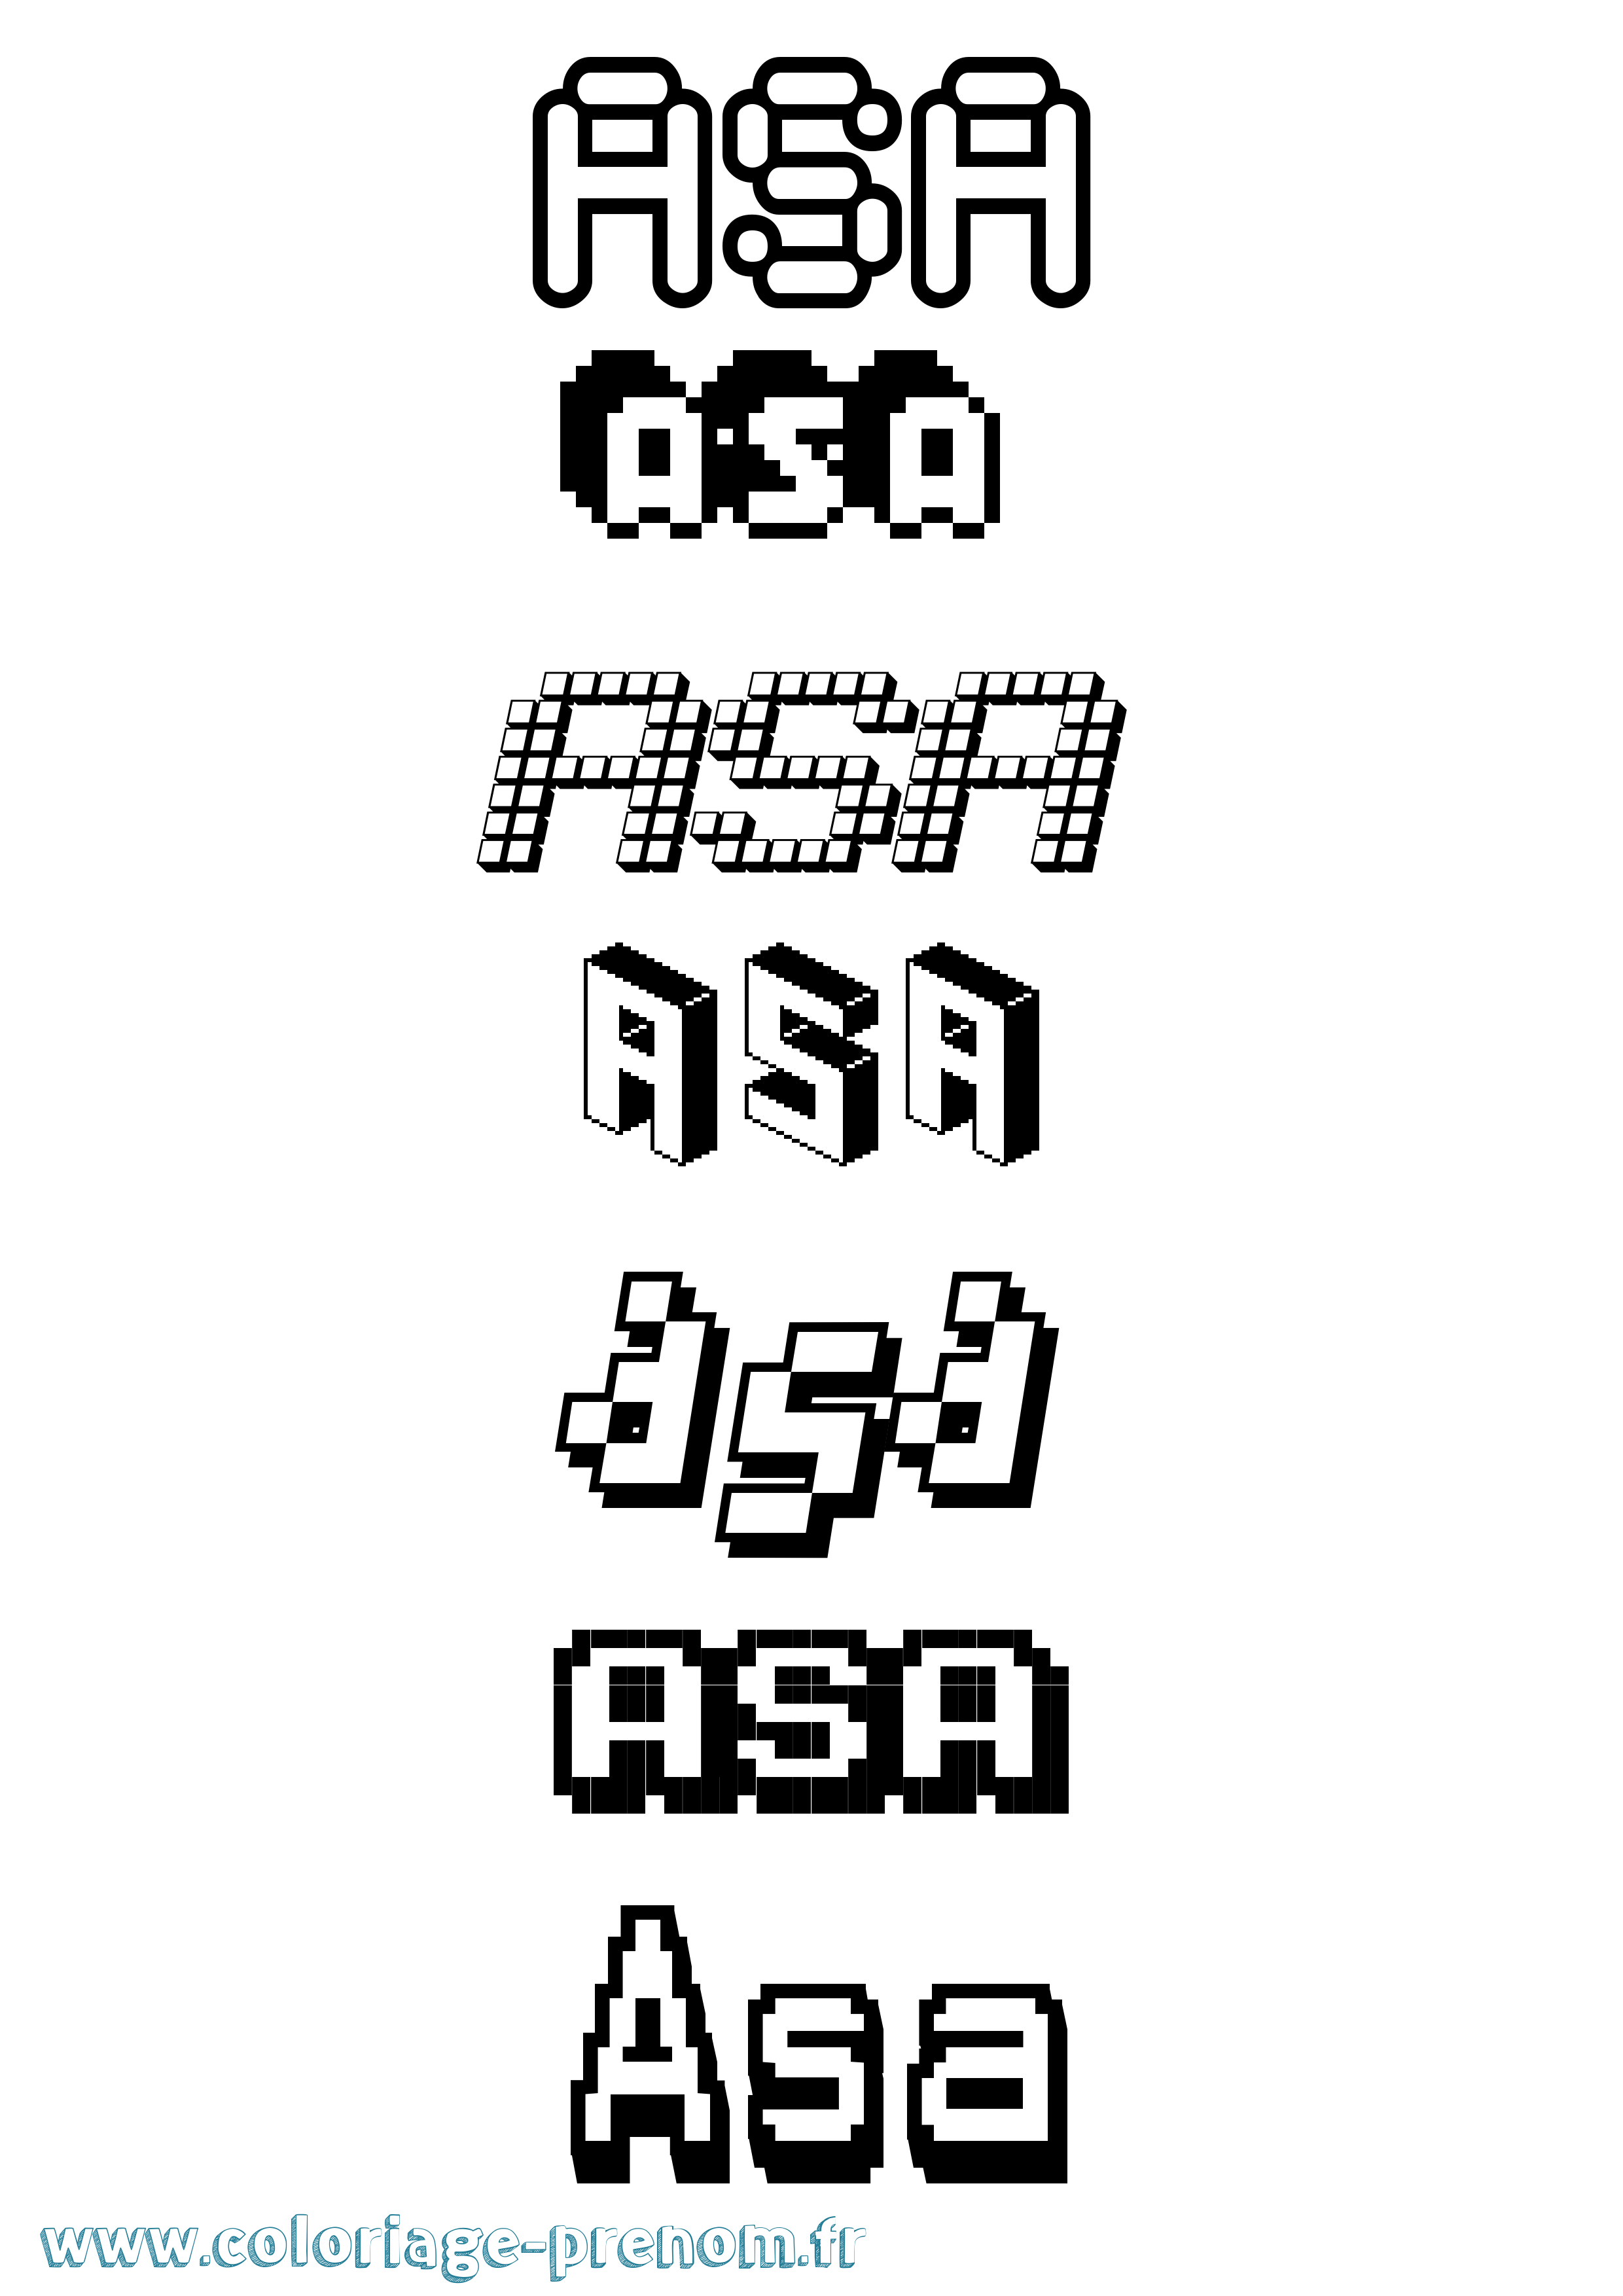 Coloriage prénom Asa Pixel